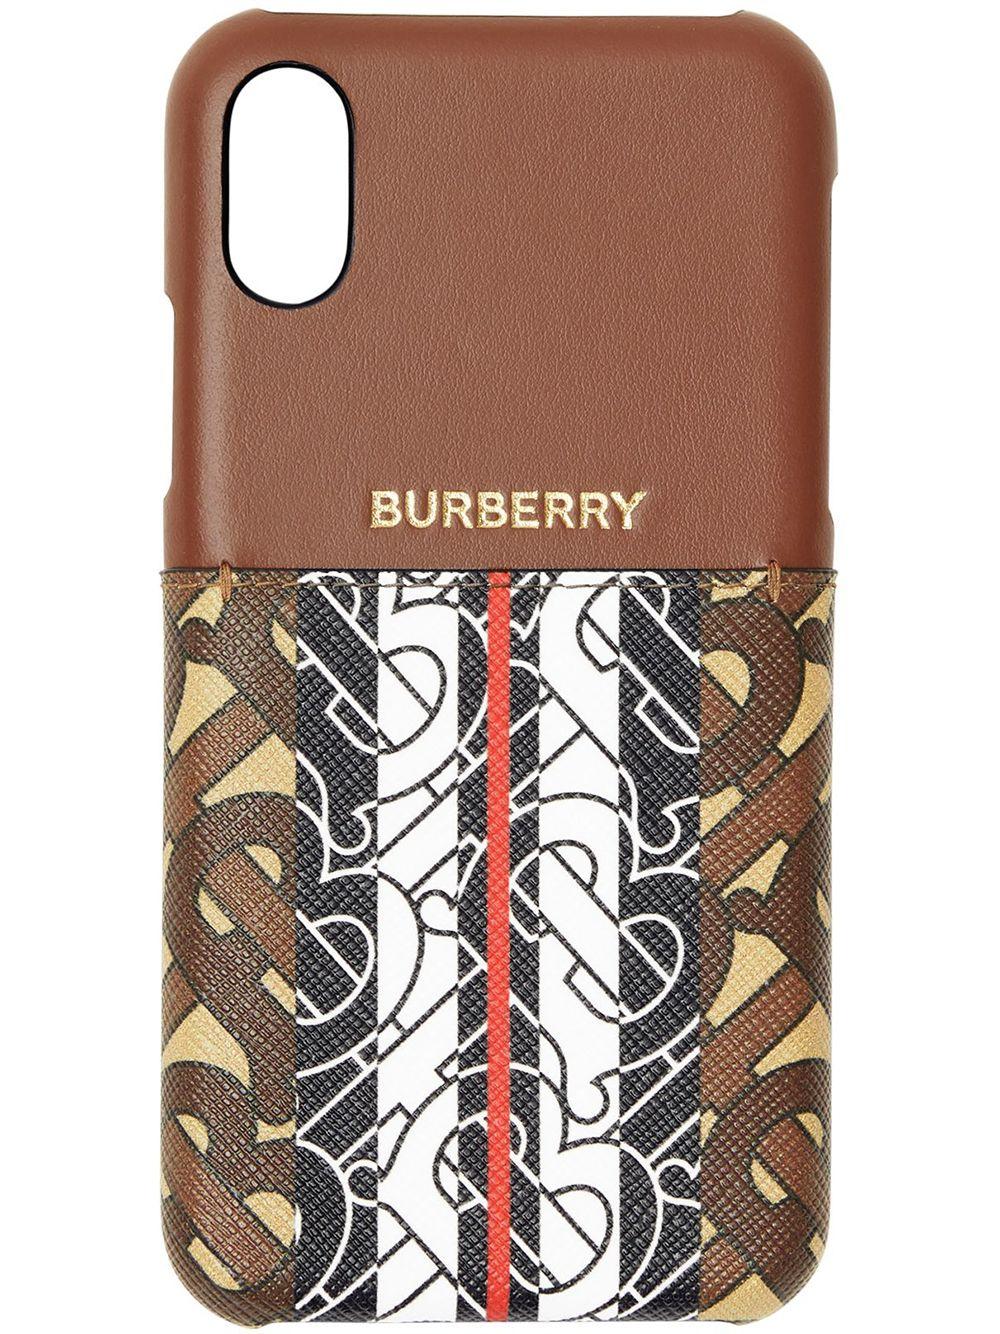 burberry iphone 11 case,lsqa.com.uy